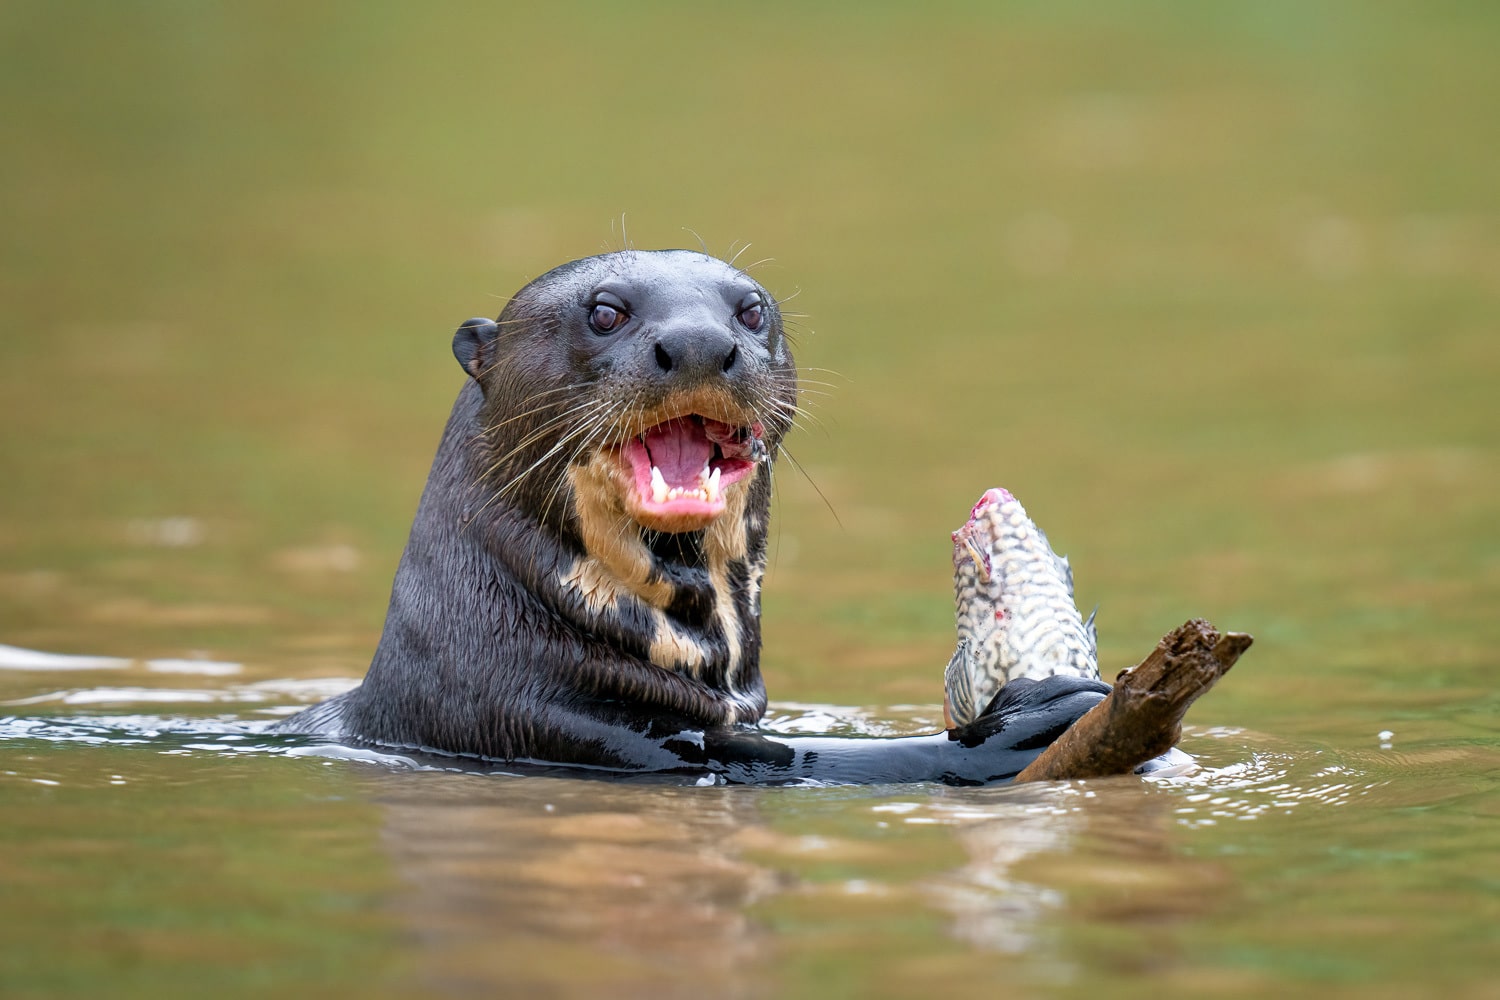 Giant-River-Otter-Brazil-Wildlife-Photography-Workshop